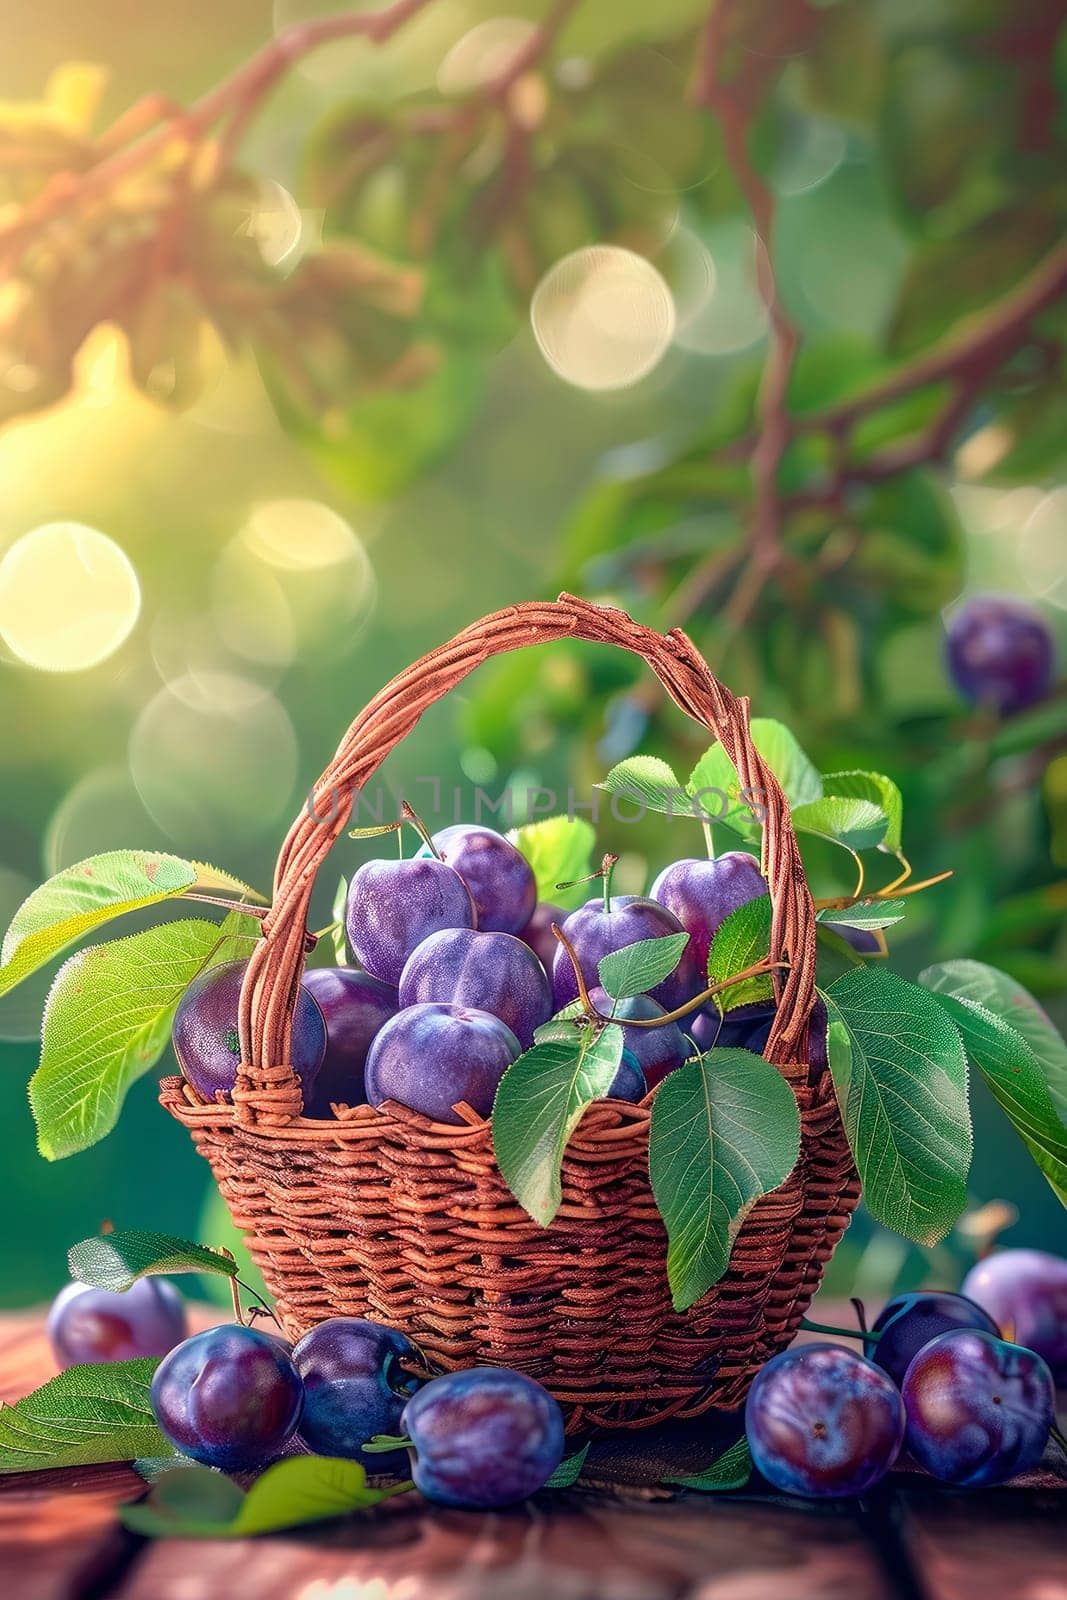 plum in a basket in the garden. selective focus. food.